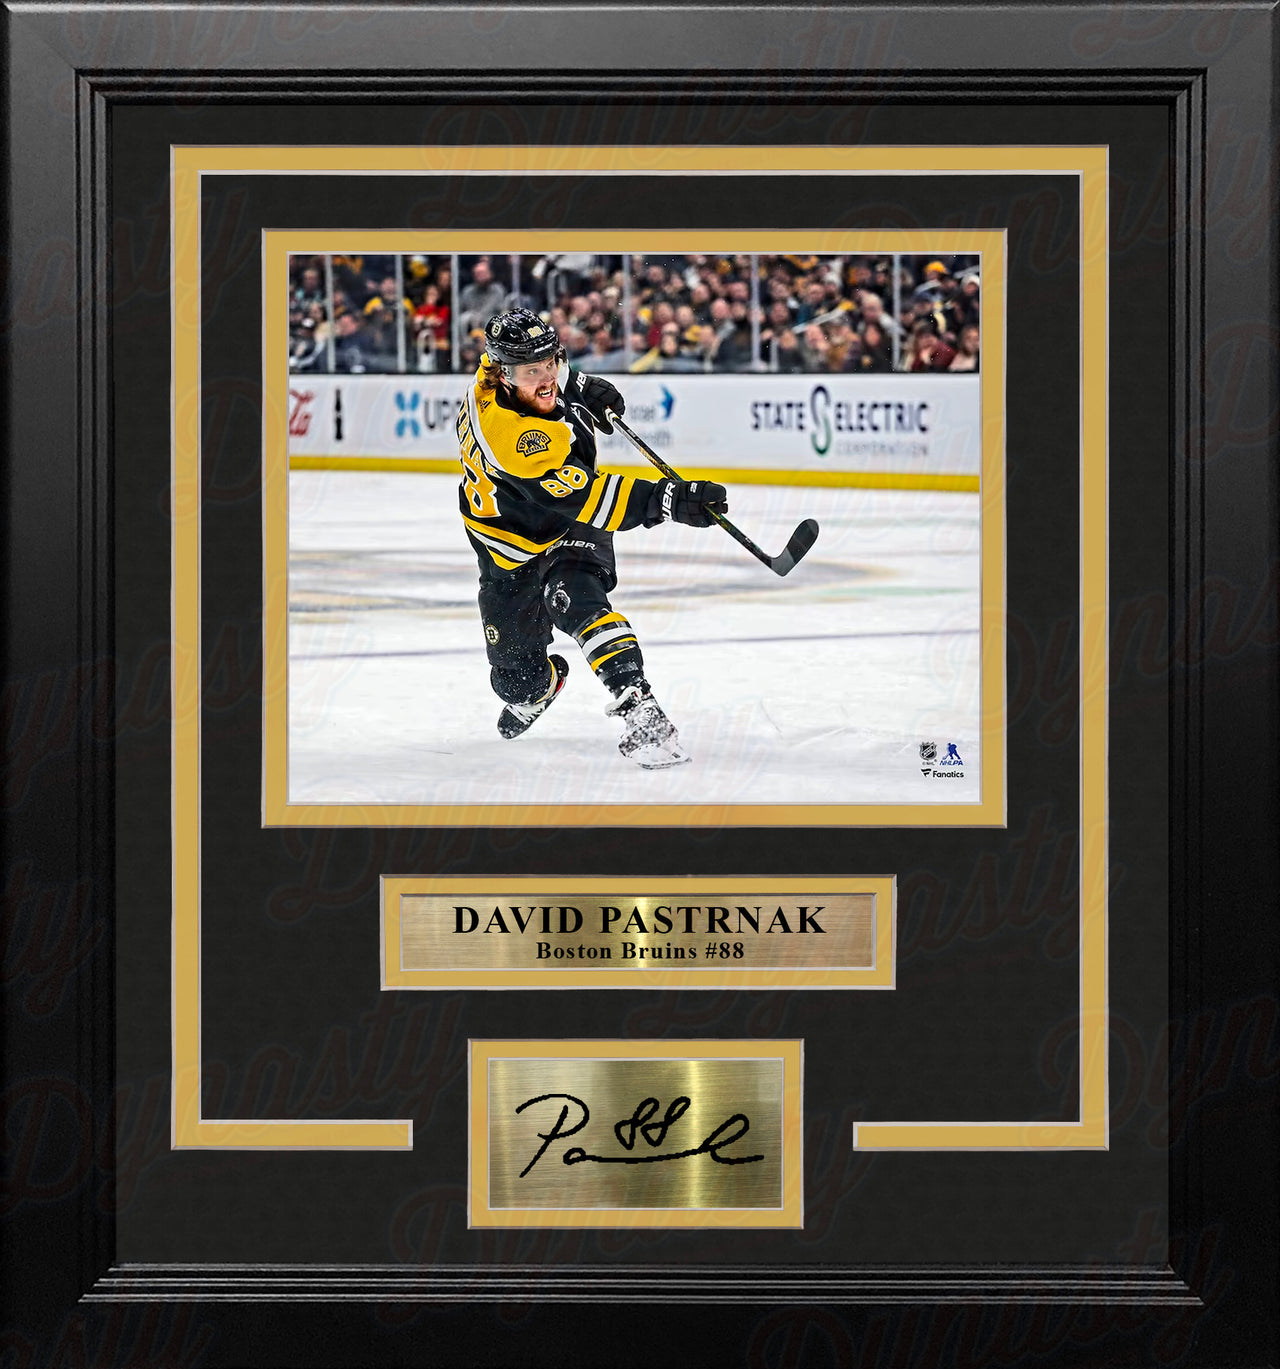 Jeremy Swayman & Linus Ullmark Bear Hug Boston Bruins Autographed 16x20  Framed Blackout Photo